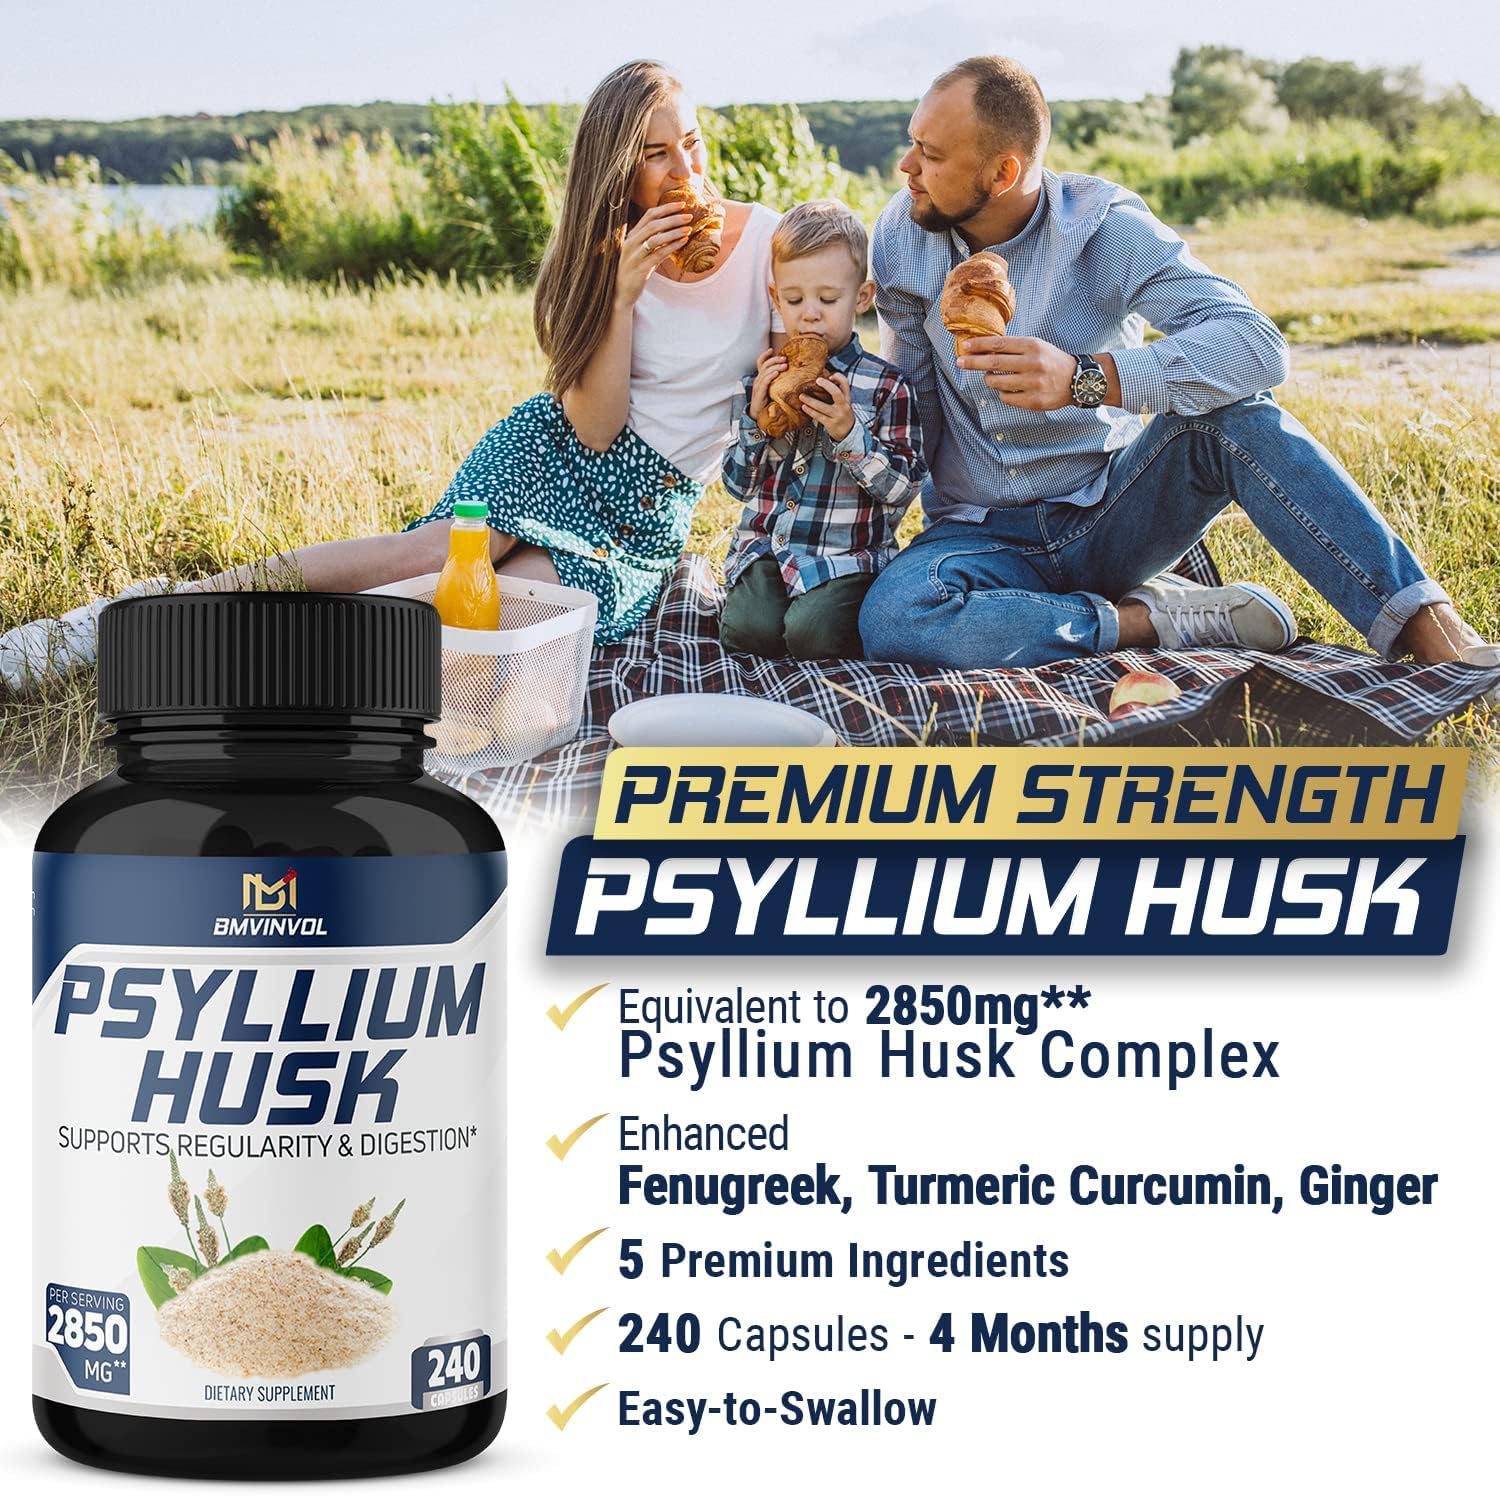 BMVINVOL Premium Psyllium Husk Capsules 2850mg - 4 Months Supply - Fenugreek, Turmeric, Ginger - Supports Digestive Health and Regularity - 240 Capsules : Health & Household